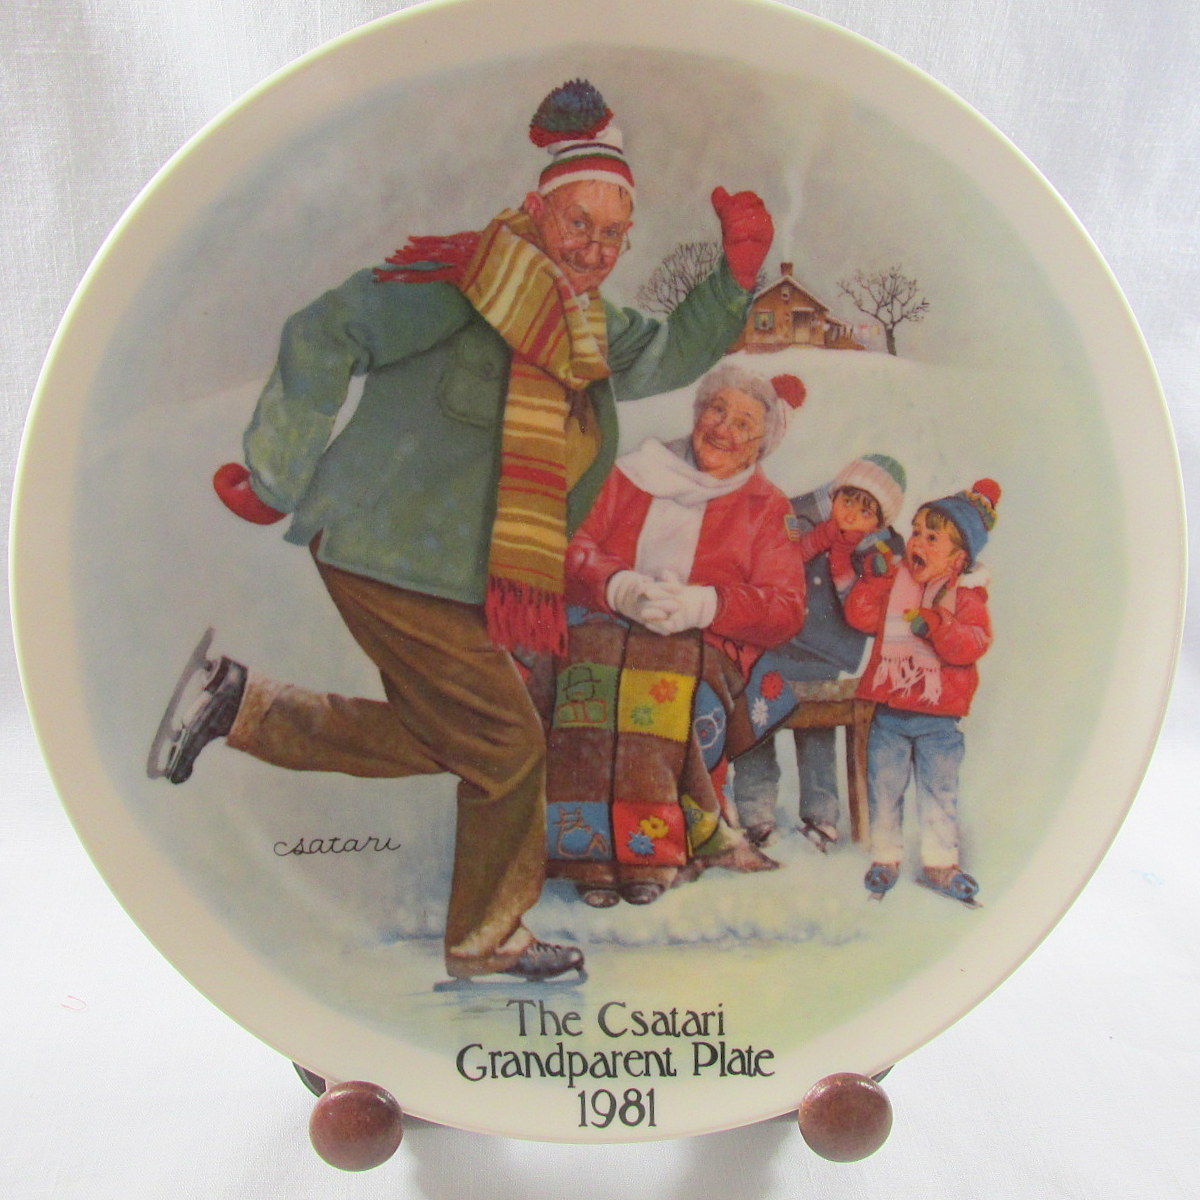 Primary image for Grandparents Ice Skating Lesson Plate Knowles 8" Csatari Series 1981 Original  c